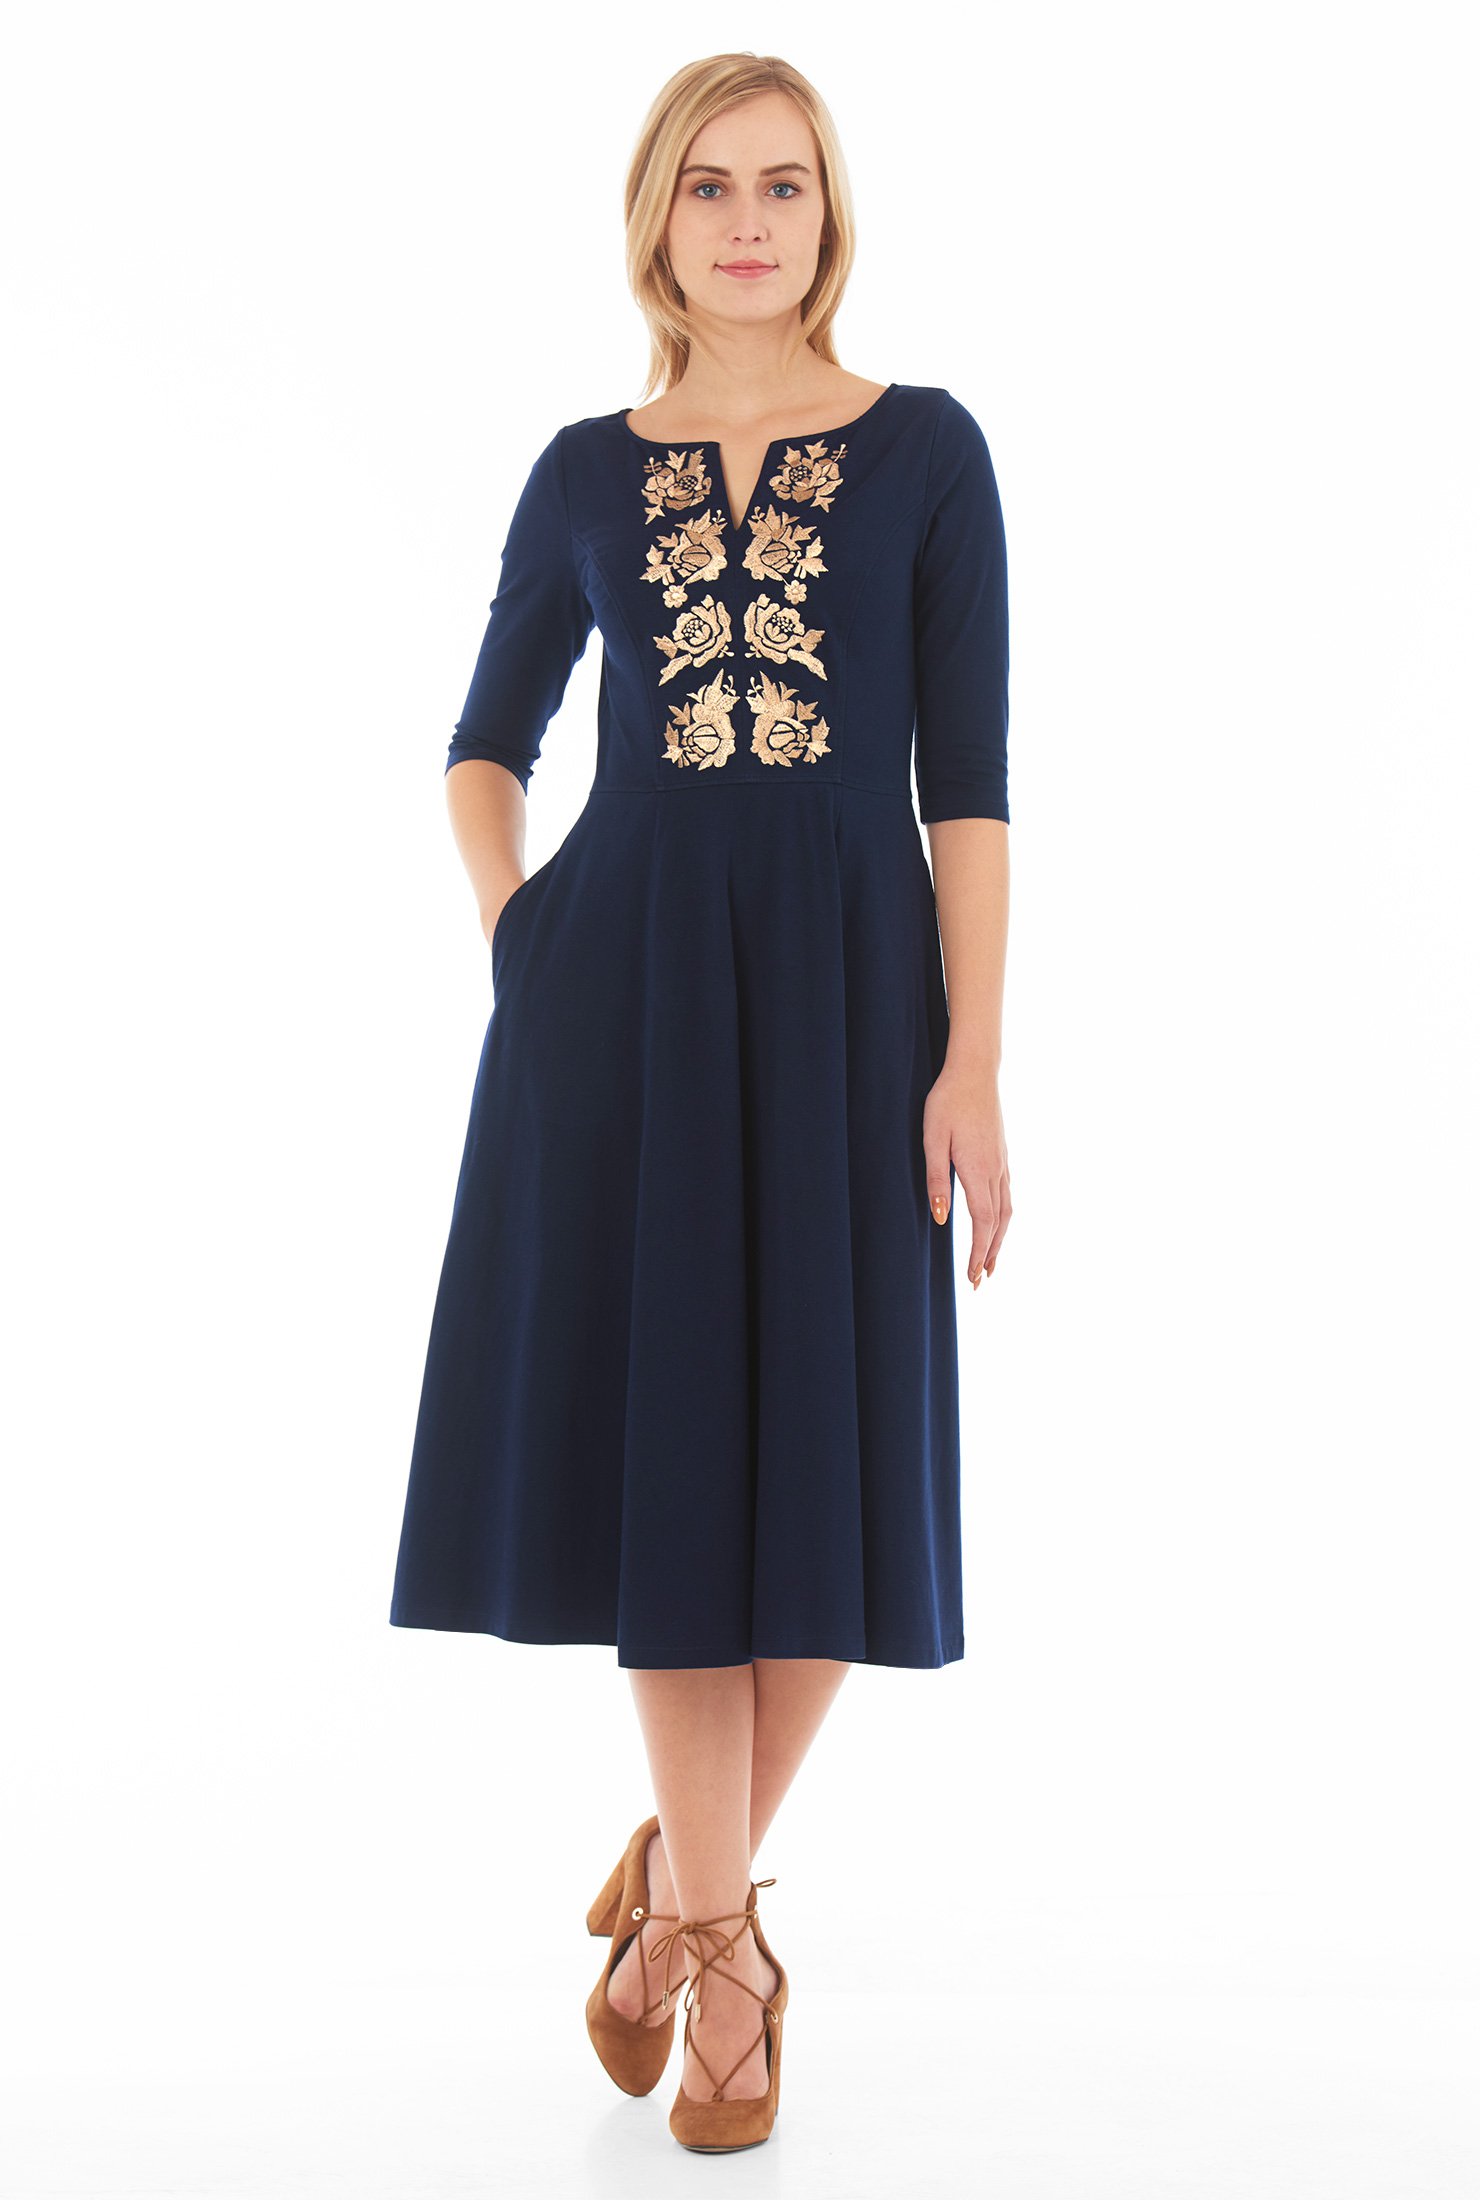 Shop Rose embellished cotton knit dress | eShakti